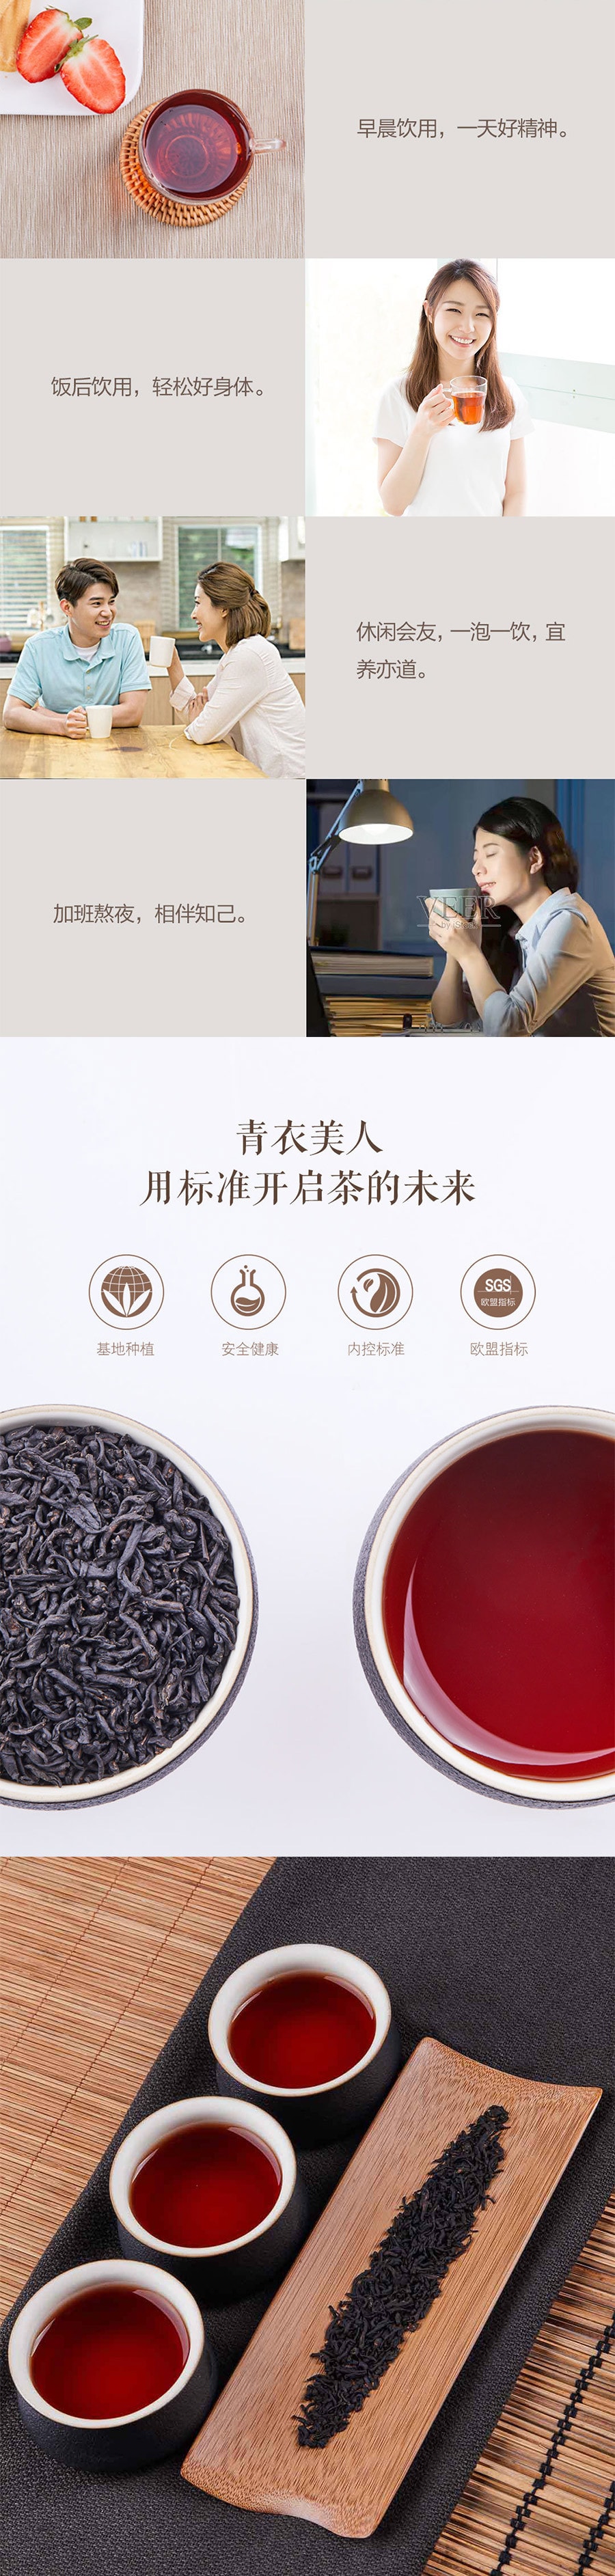 XIAOMI YOUPIN TSING-Yi BEAUTY IMPRESSION LANDSCAPE SERIES No. 1 Black Tea 200g (5gx40 bags / box)